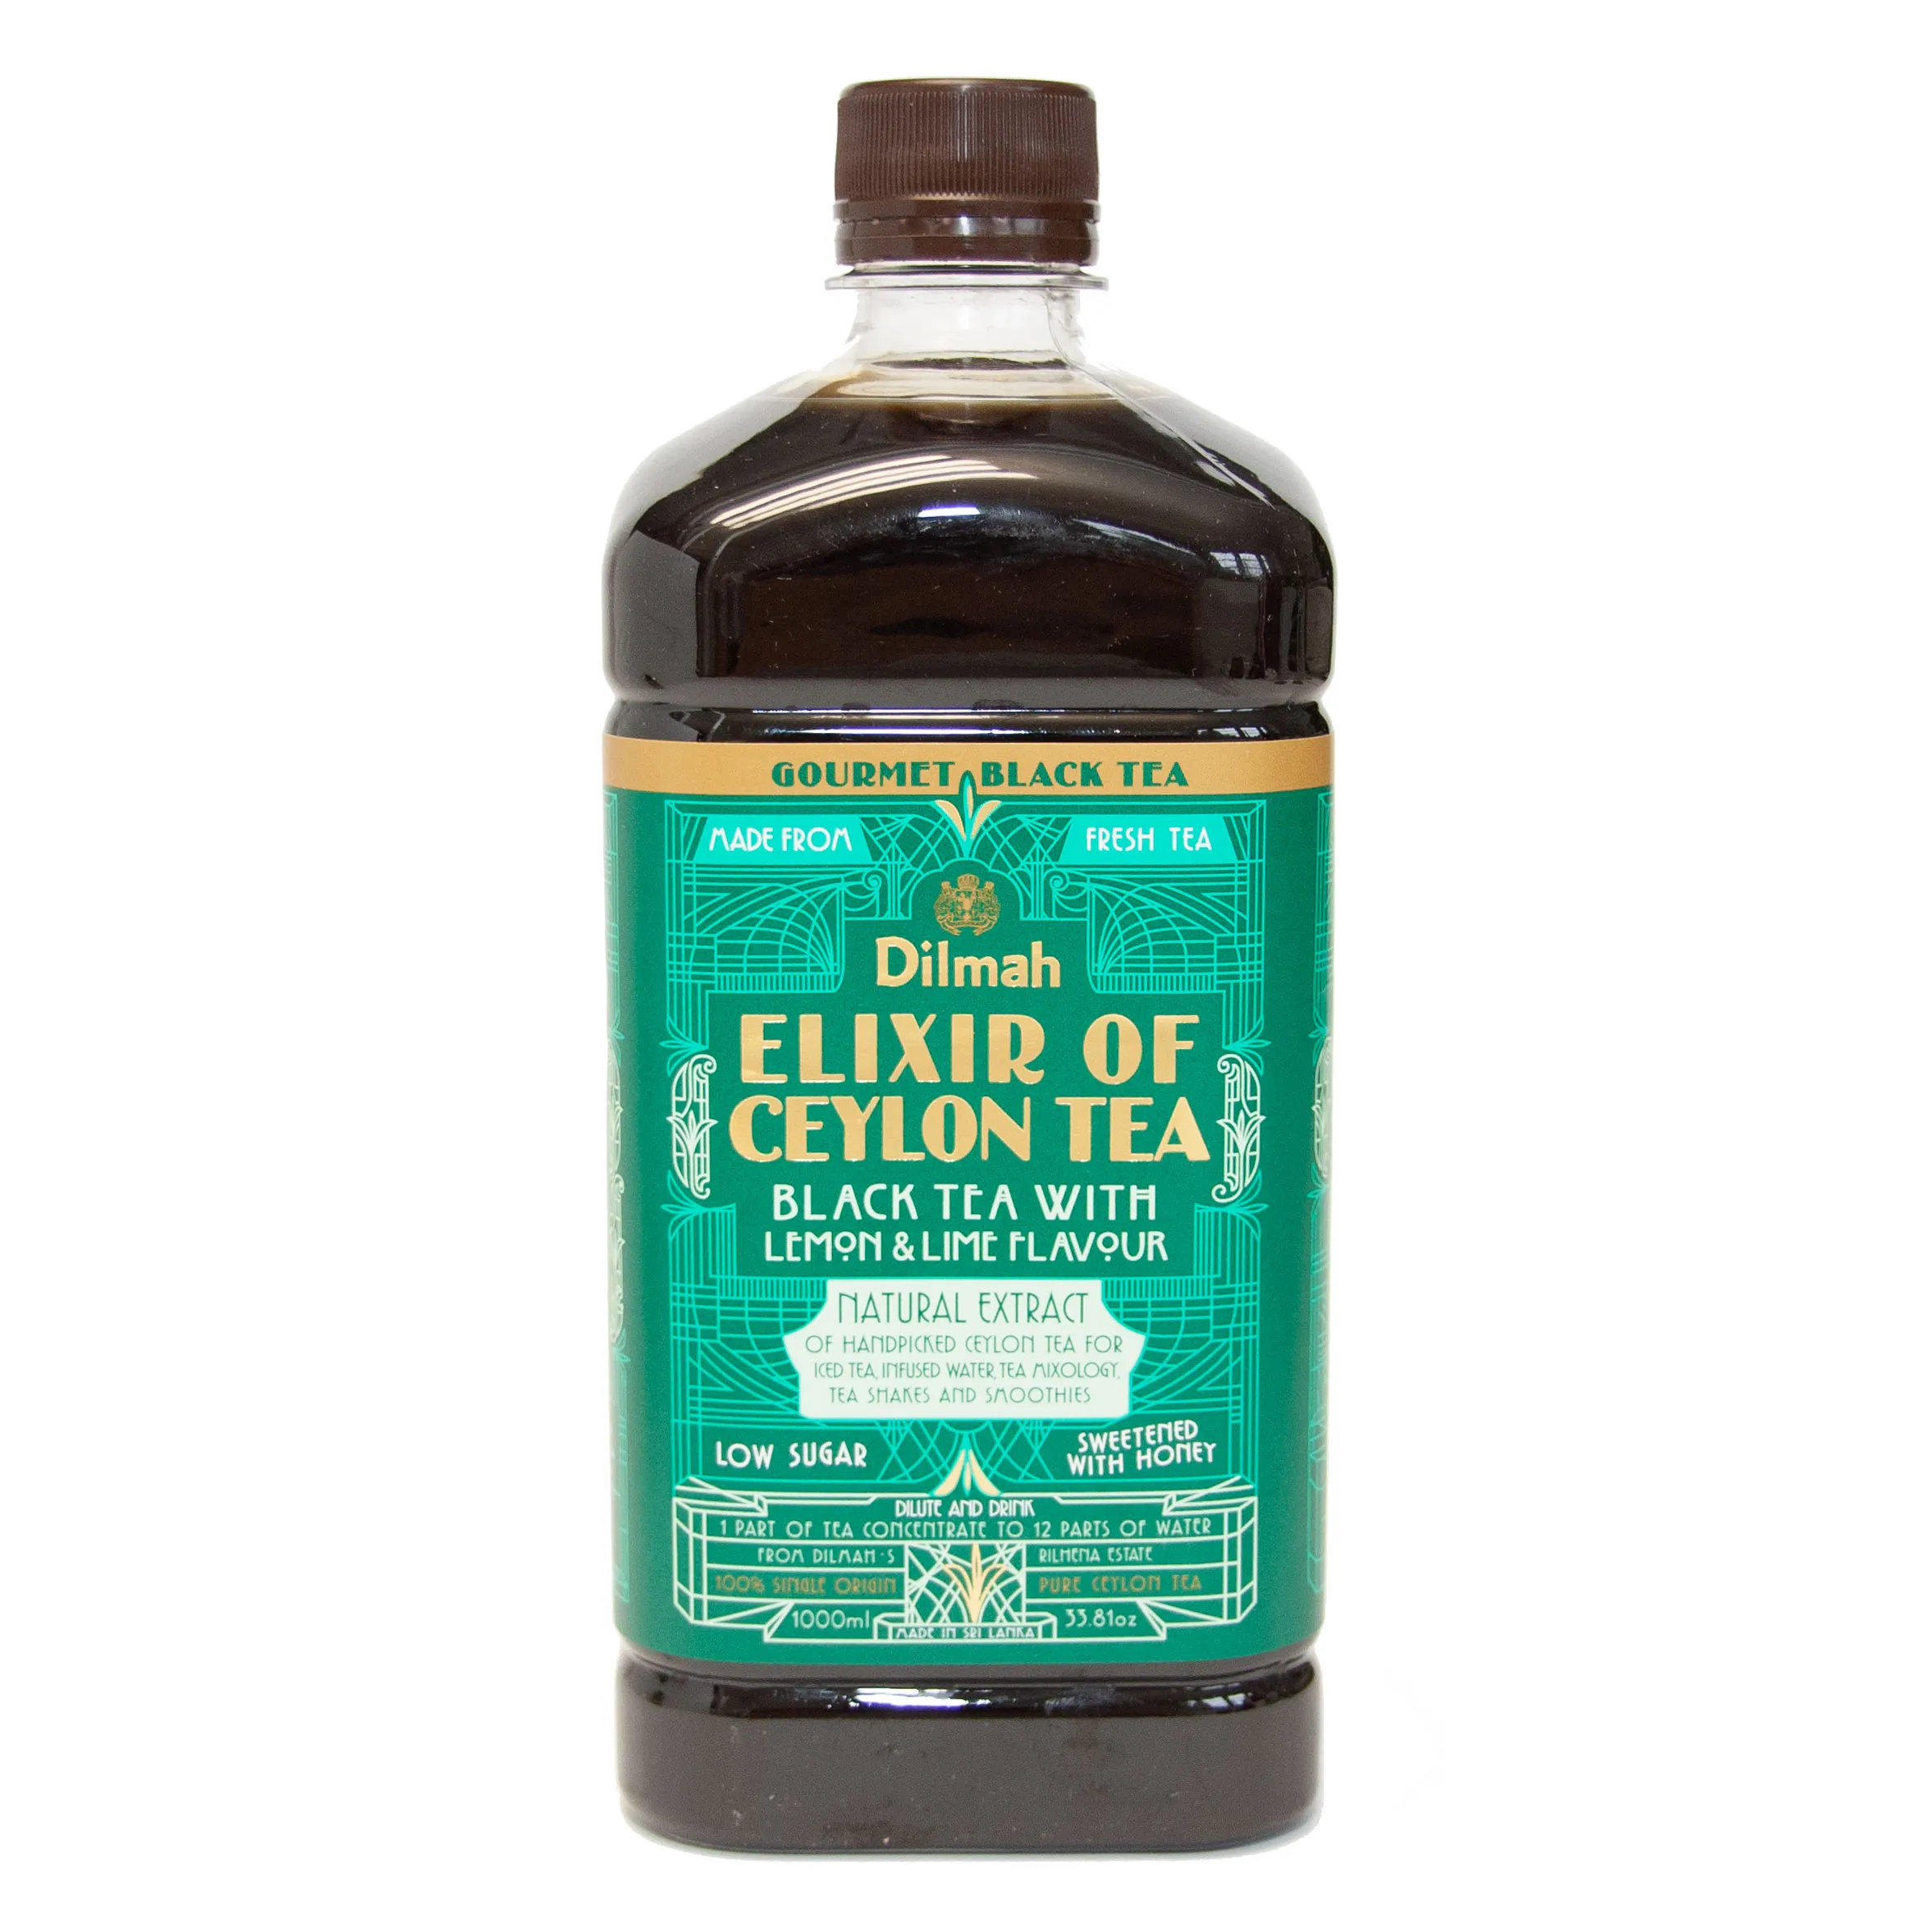 Bottle of Elixir of Ceylon black tea with Lemon and Lime flavour